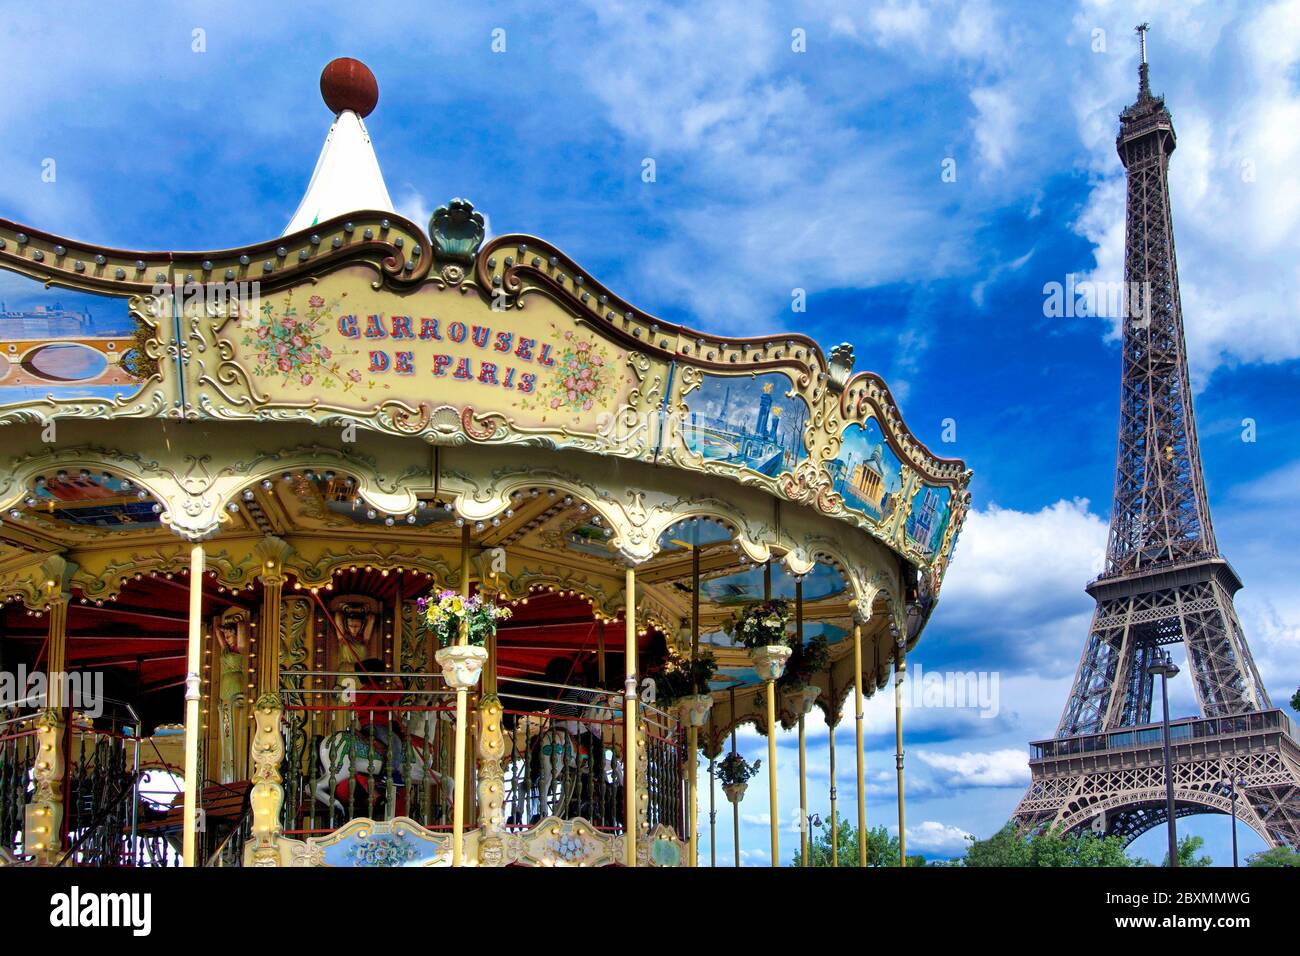 Paris. Altmodisches Karussell im Park in der Nähe des Eiffelturms. Ile de France. Frankreich. Stockfoto